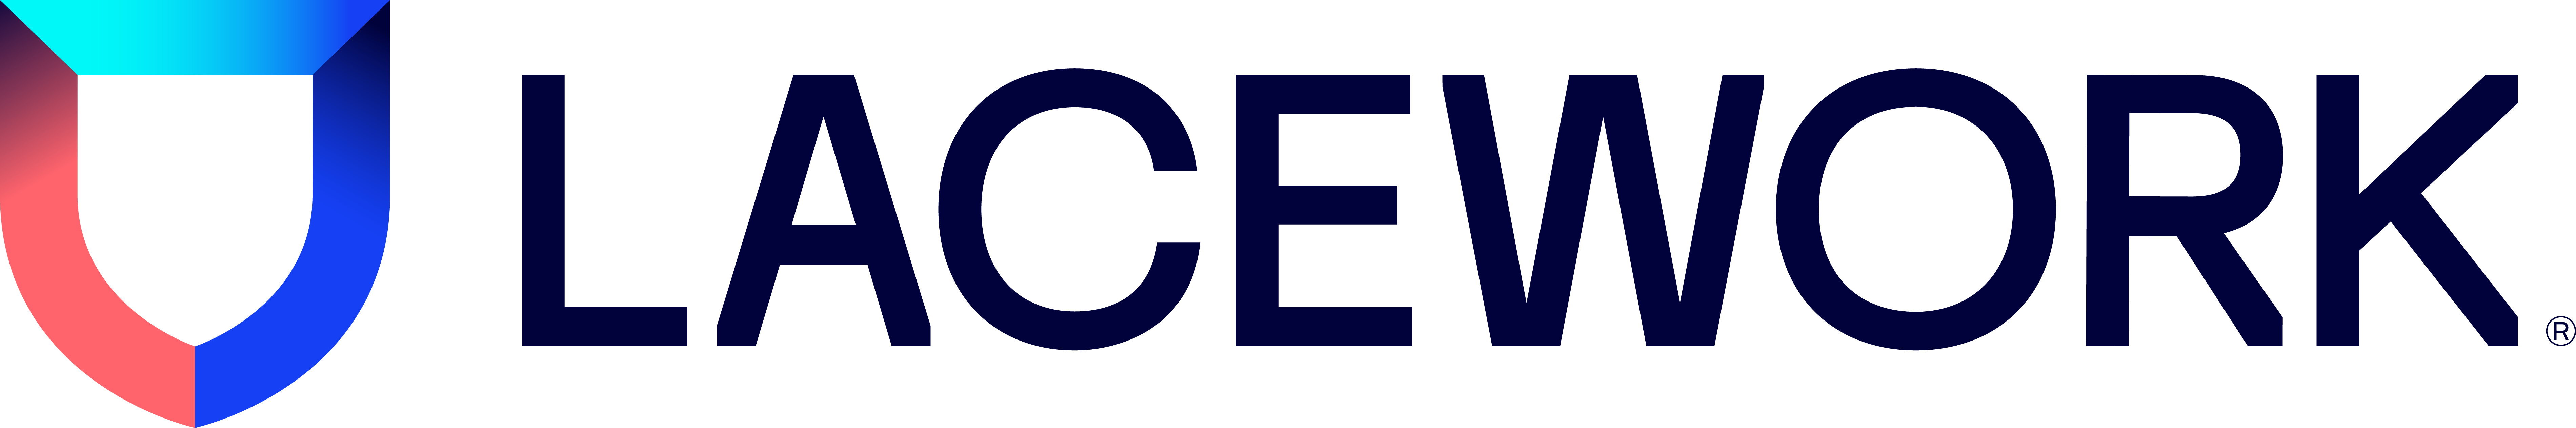 Lacework logo